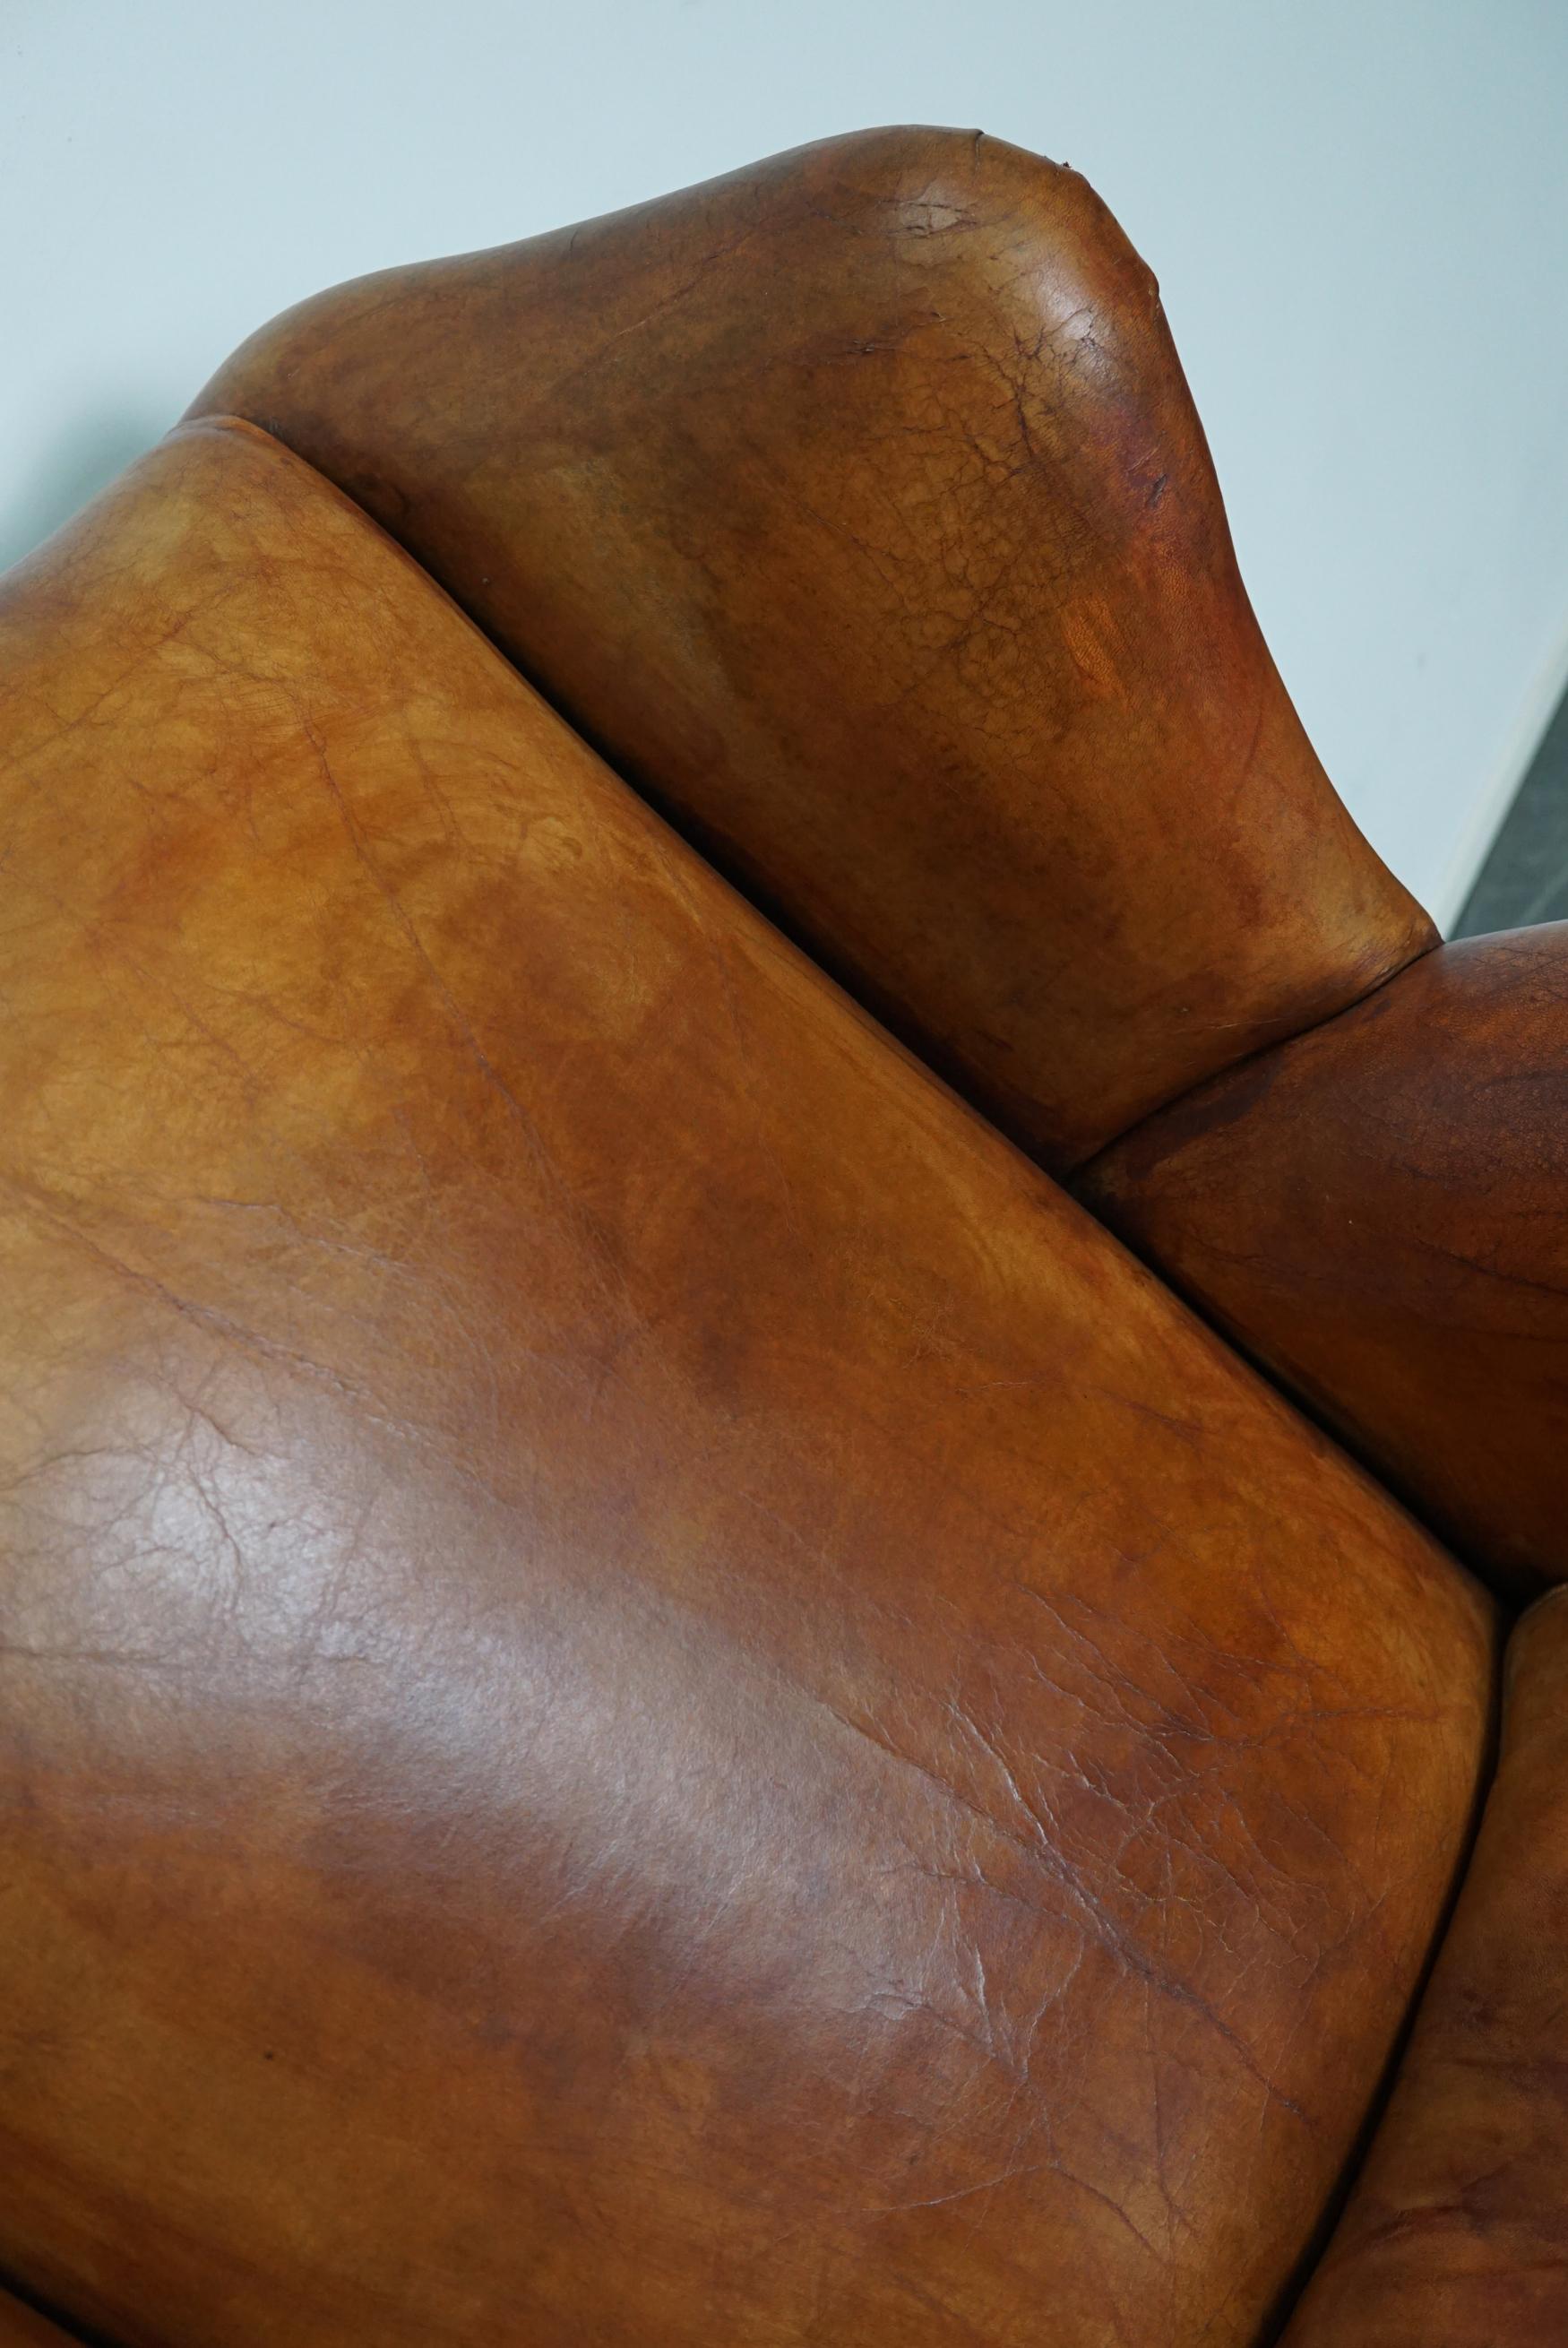 Late 20th Century Vintage Dutch Cognac Leather Club Chair